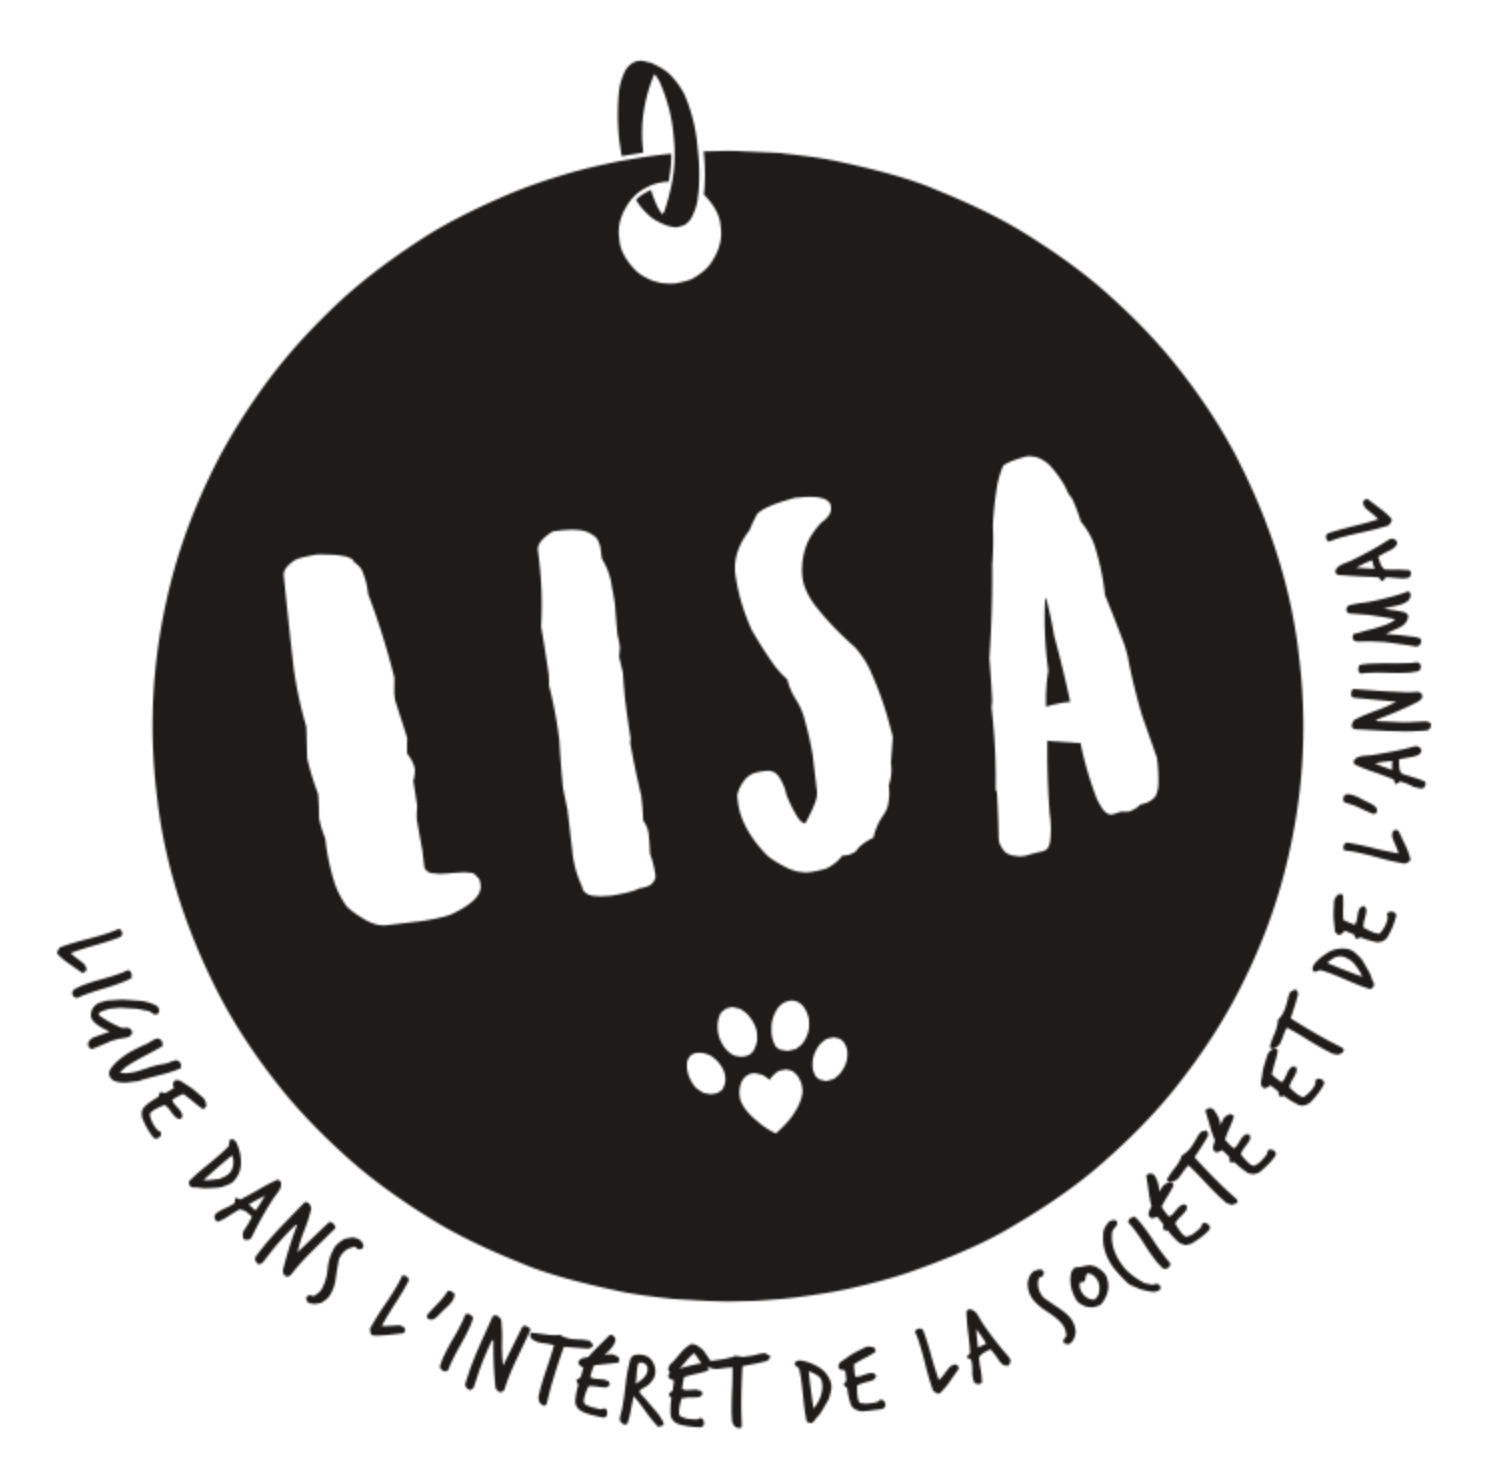 Association LISA